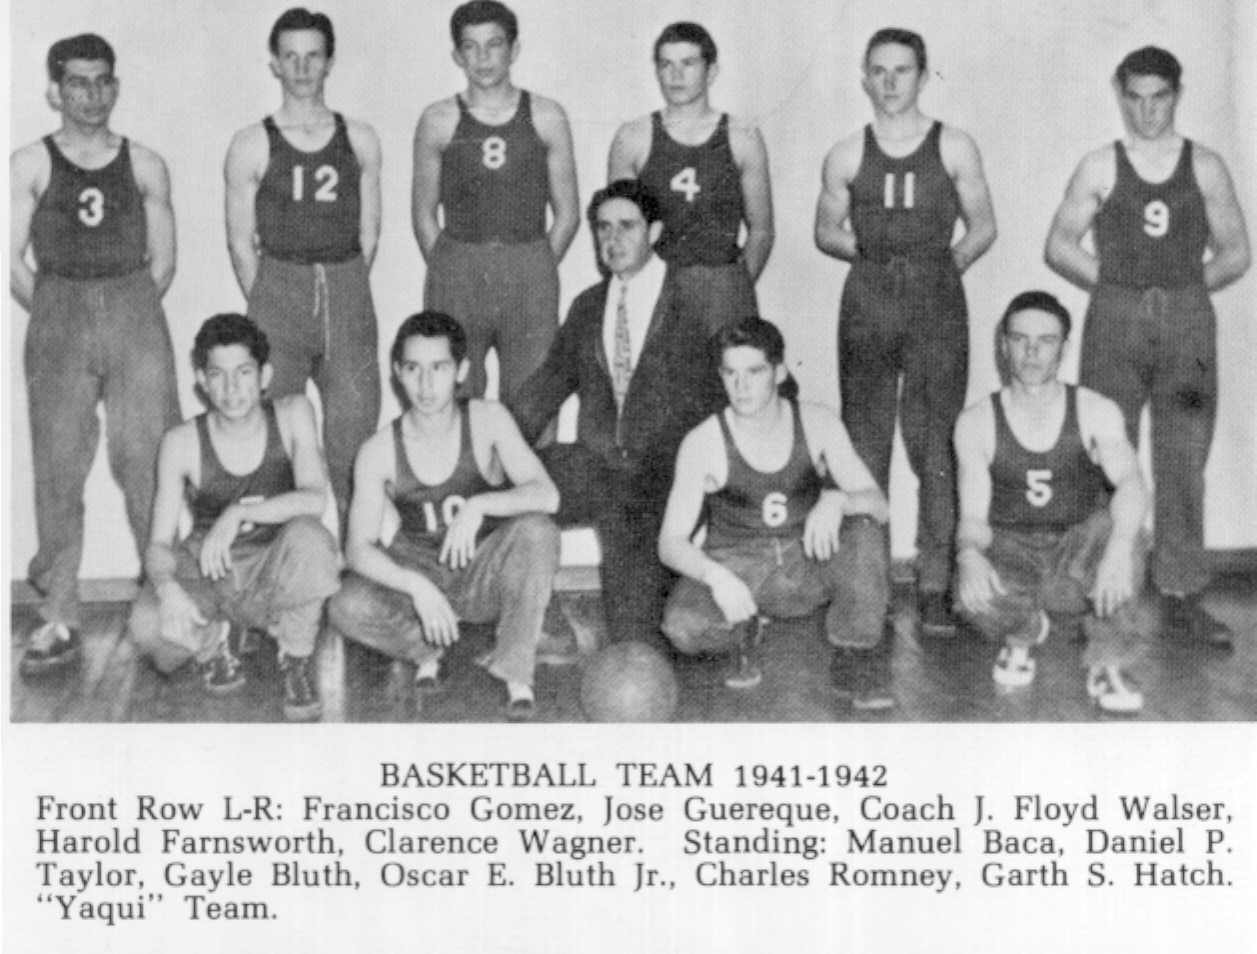 Juarez Stake Academy 1941-1942 Baketball team